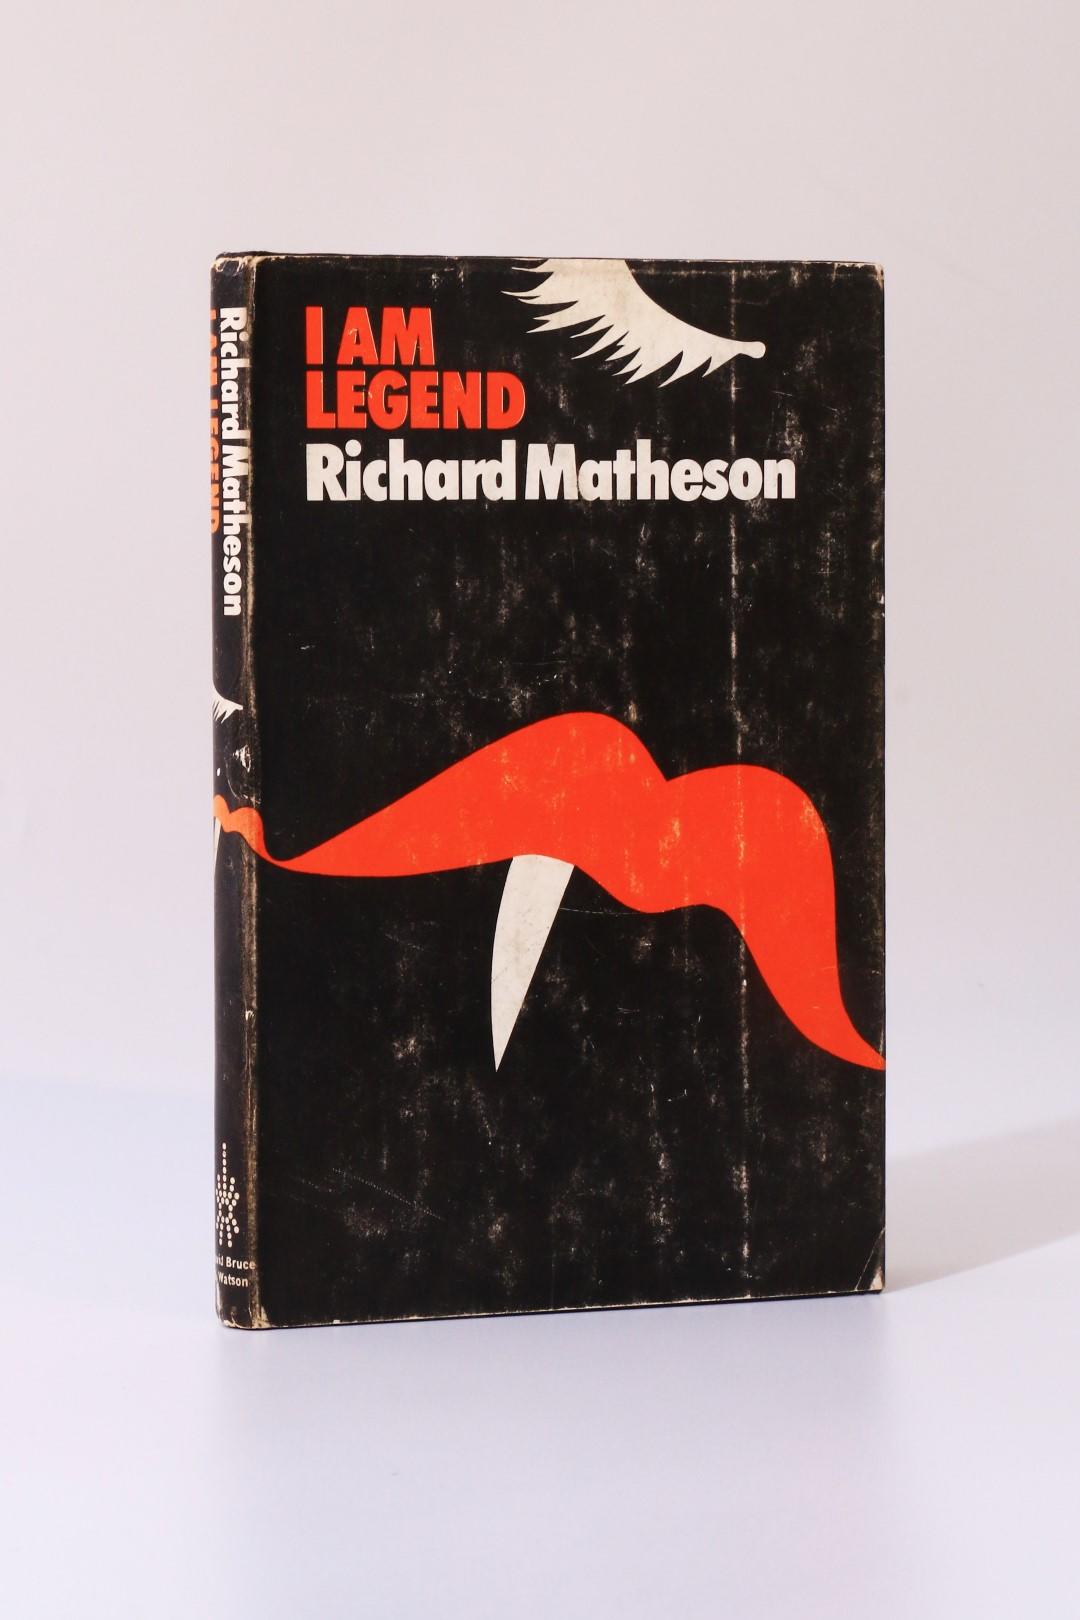 Richard Matheson - I Am Legend - David Bruce & Watson, 1974, First Edition.